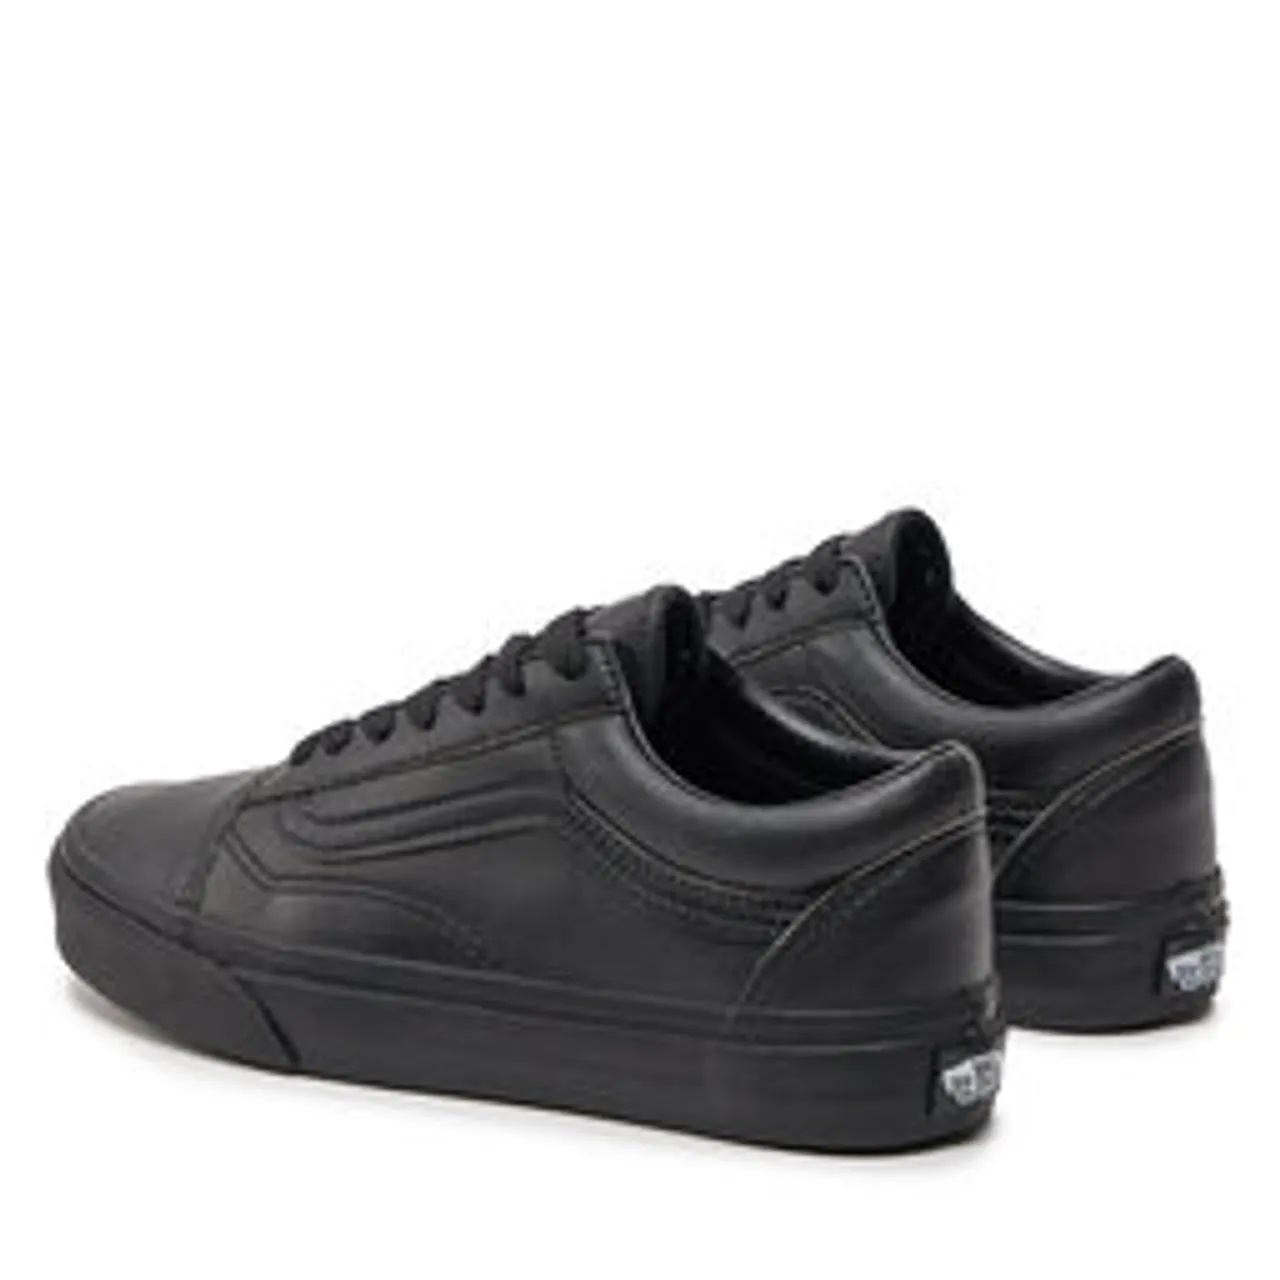 Sneakers aus Stoff Vans Old Skool VN0A38G1PXP (Classic Tumble) Blk Mono